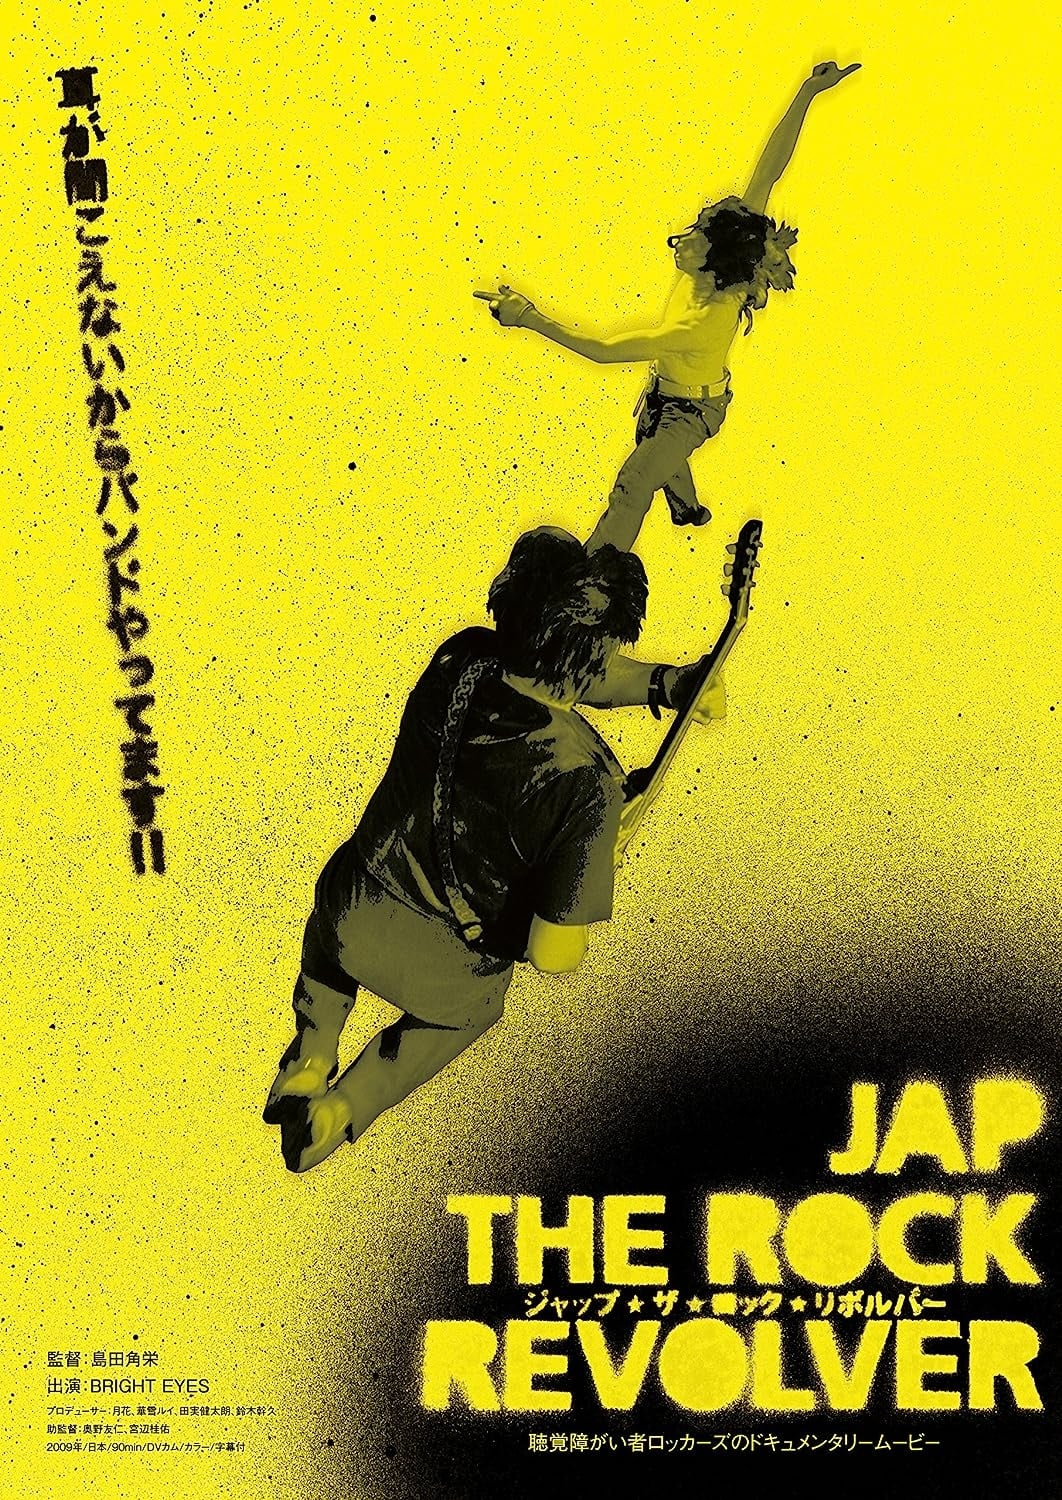 JAP THE ROCK REVOLVER